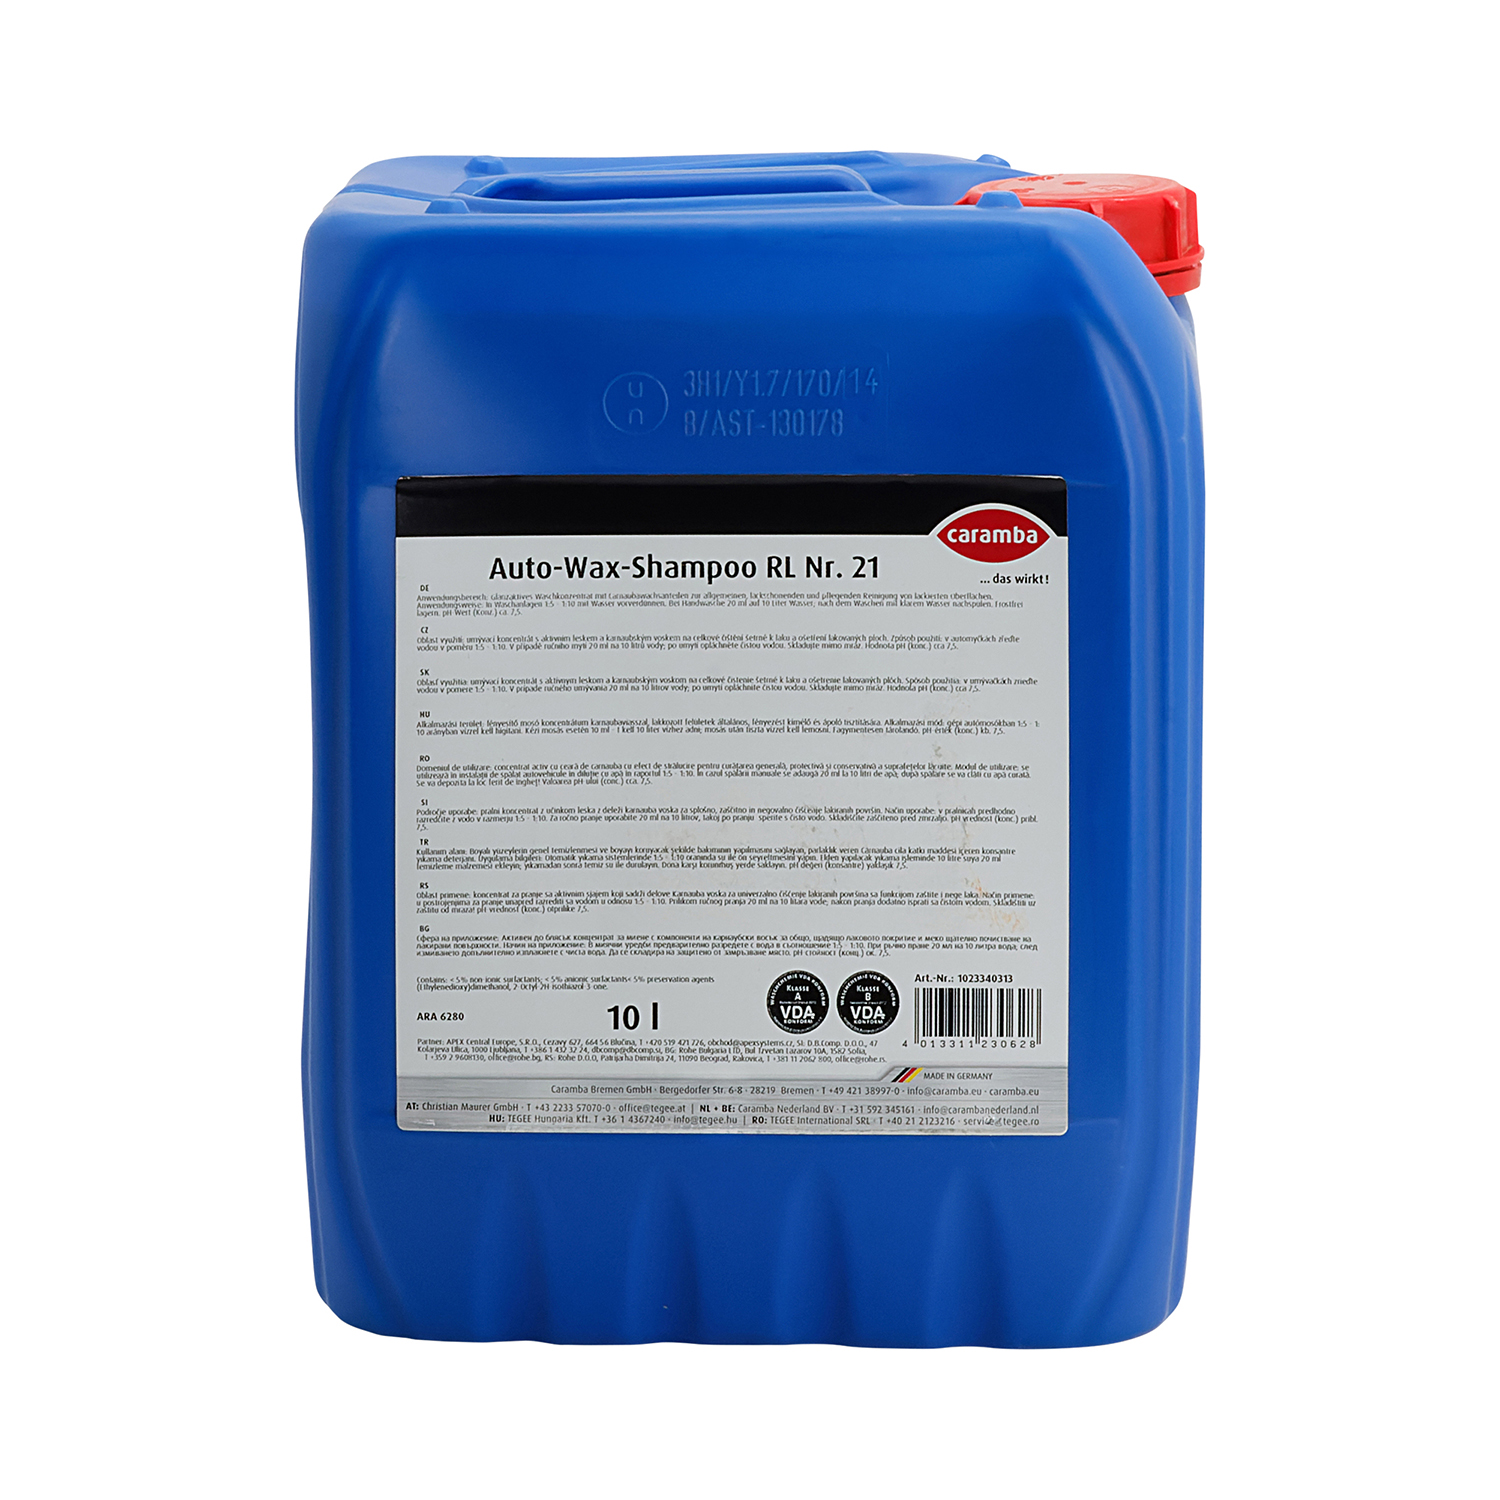 CARAMBA Auto Wax-Shampoo RL Nr. 21 10 Liter Kanister (Konzentrat)